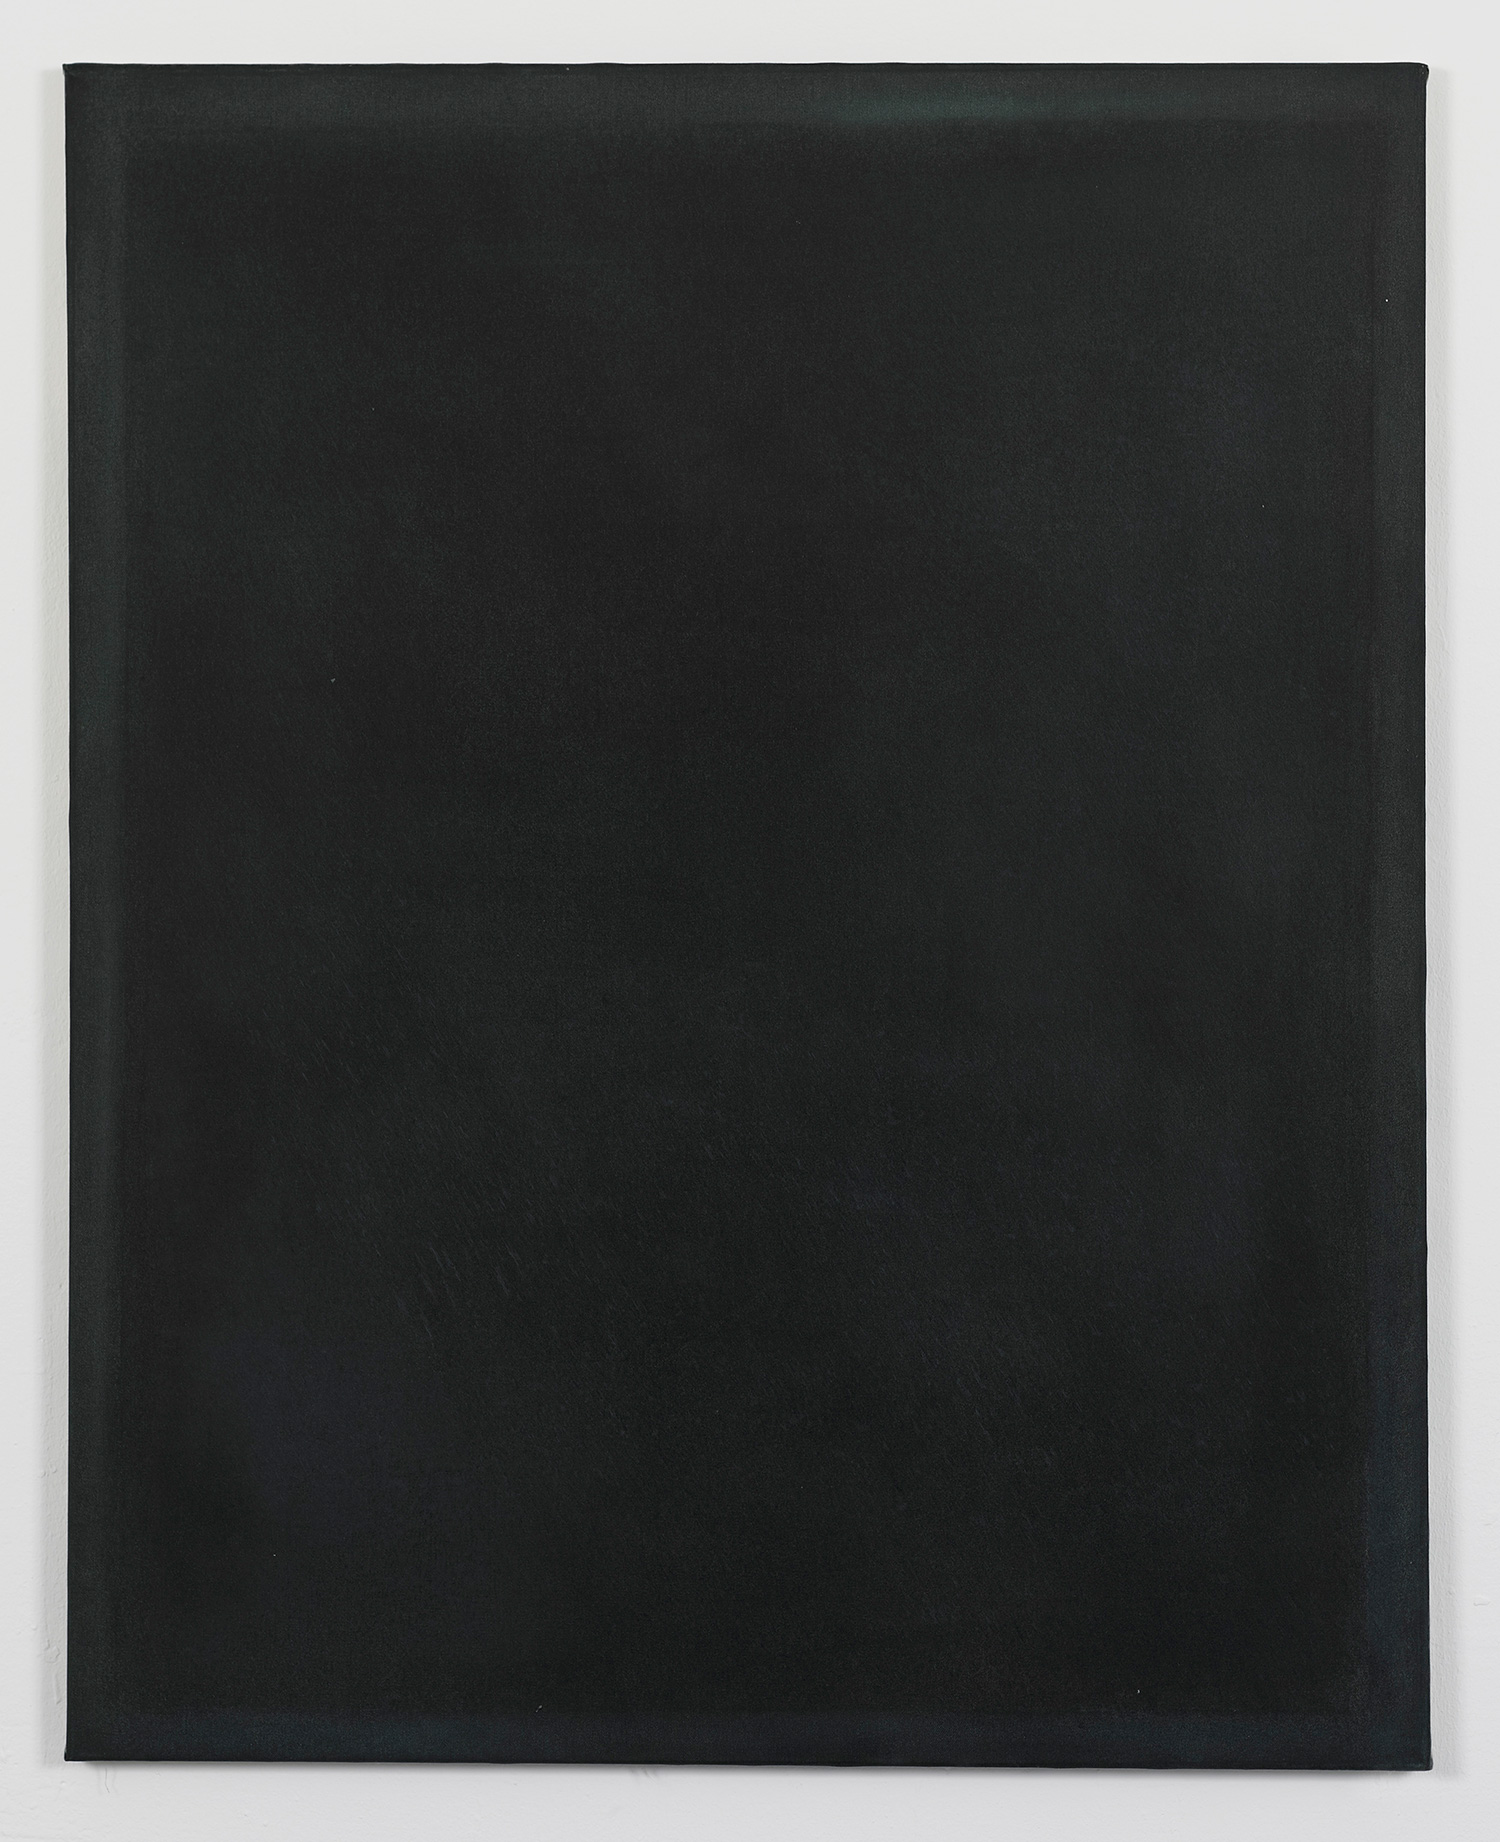  waterhome screen. 2011, 125 x 100 cm. oil on canvas 